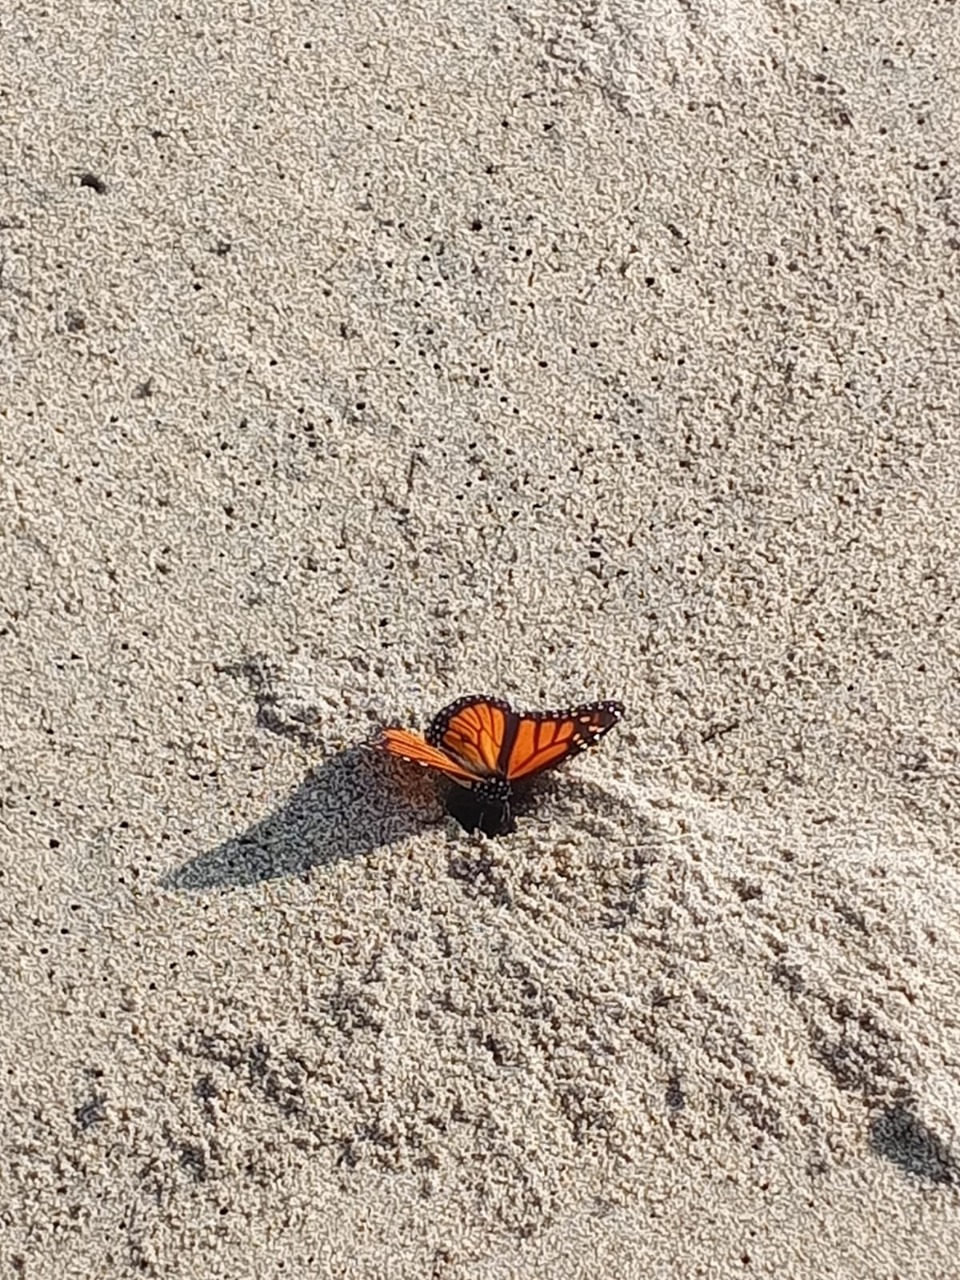 mariposa en la playa